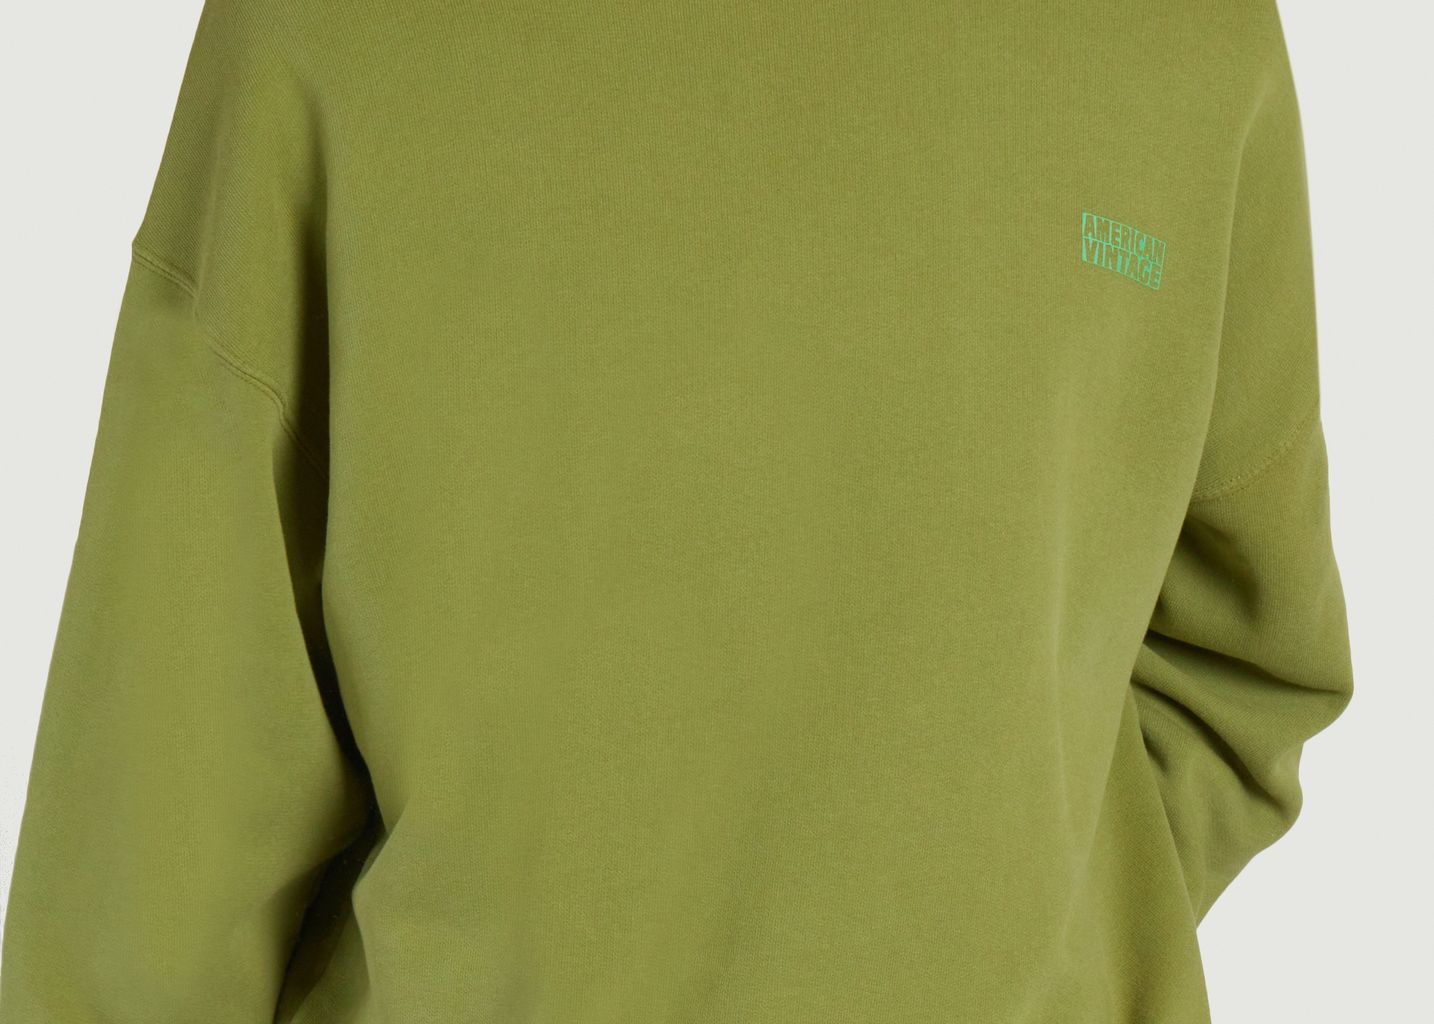 Sweatshirt with Izubird logo, loose fit - American Vintage